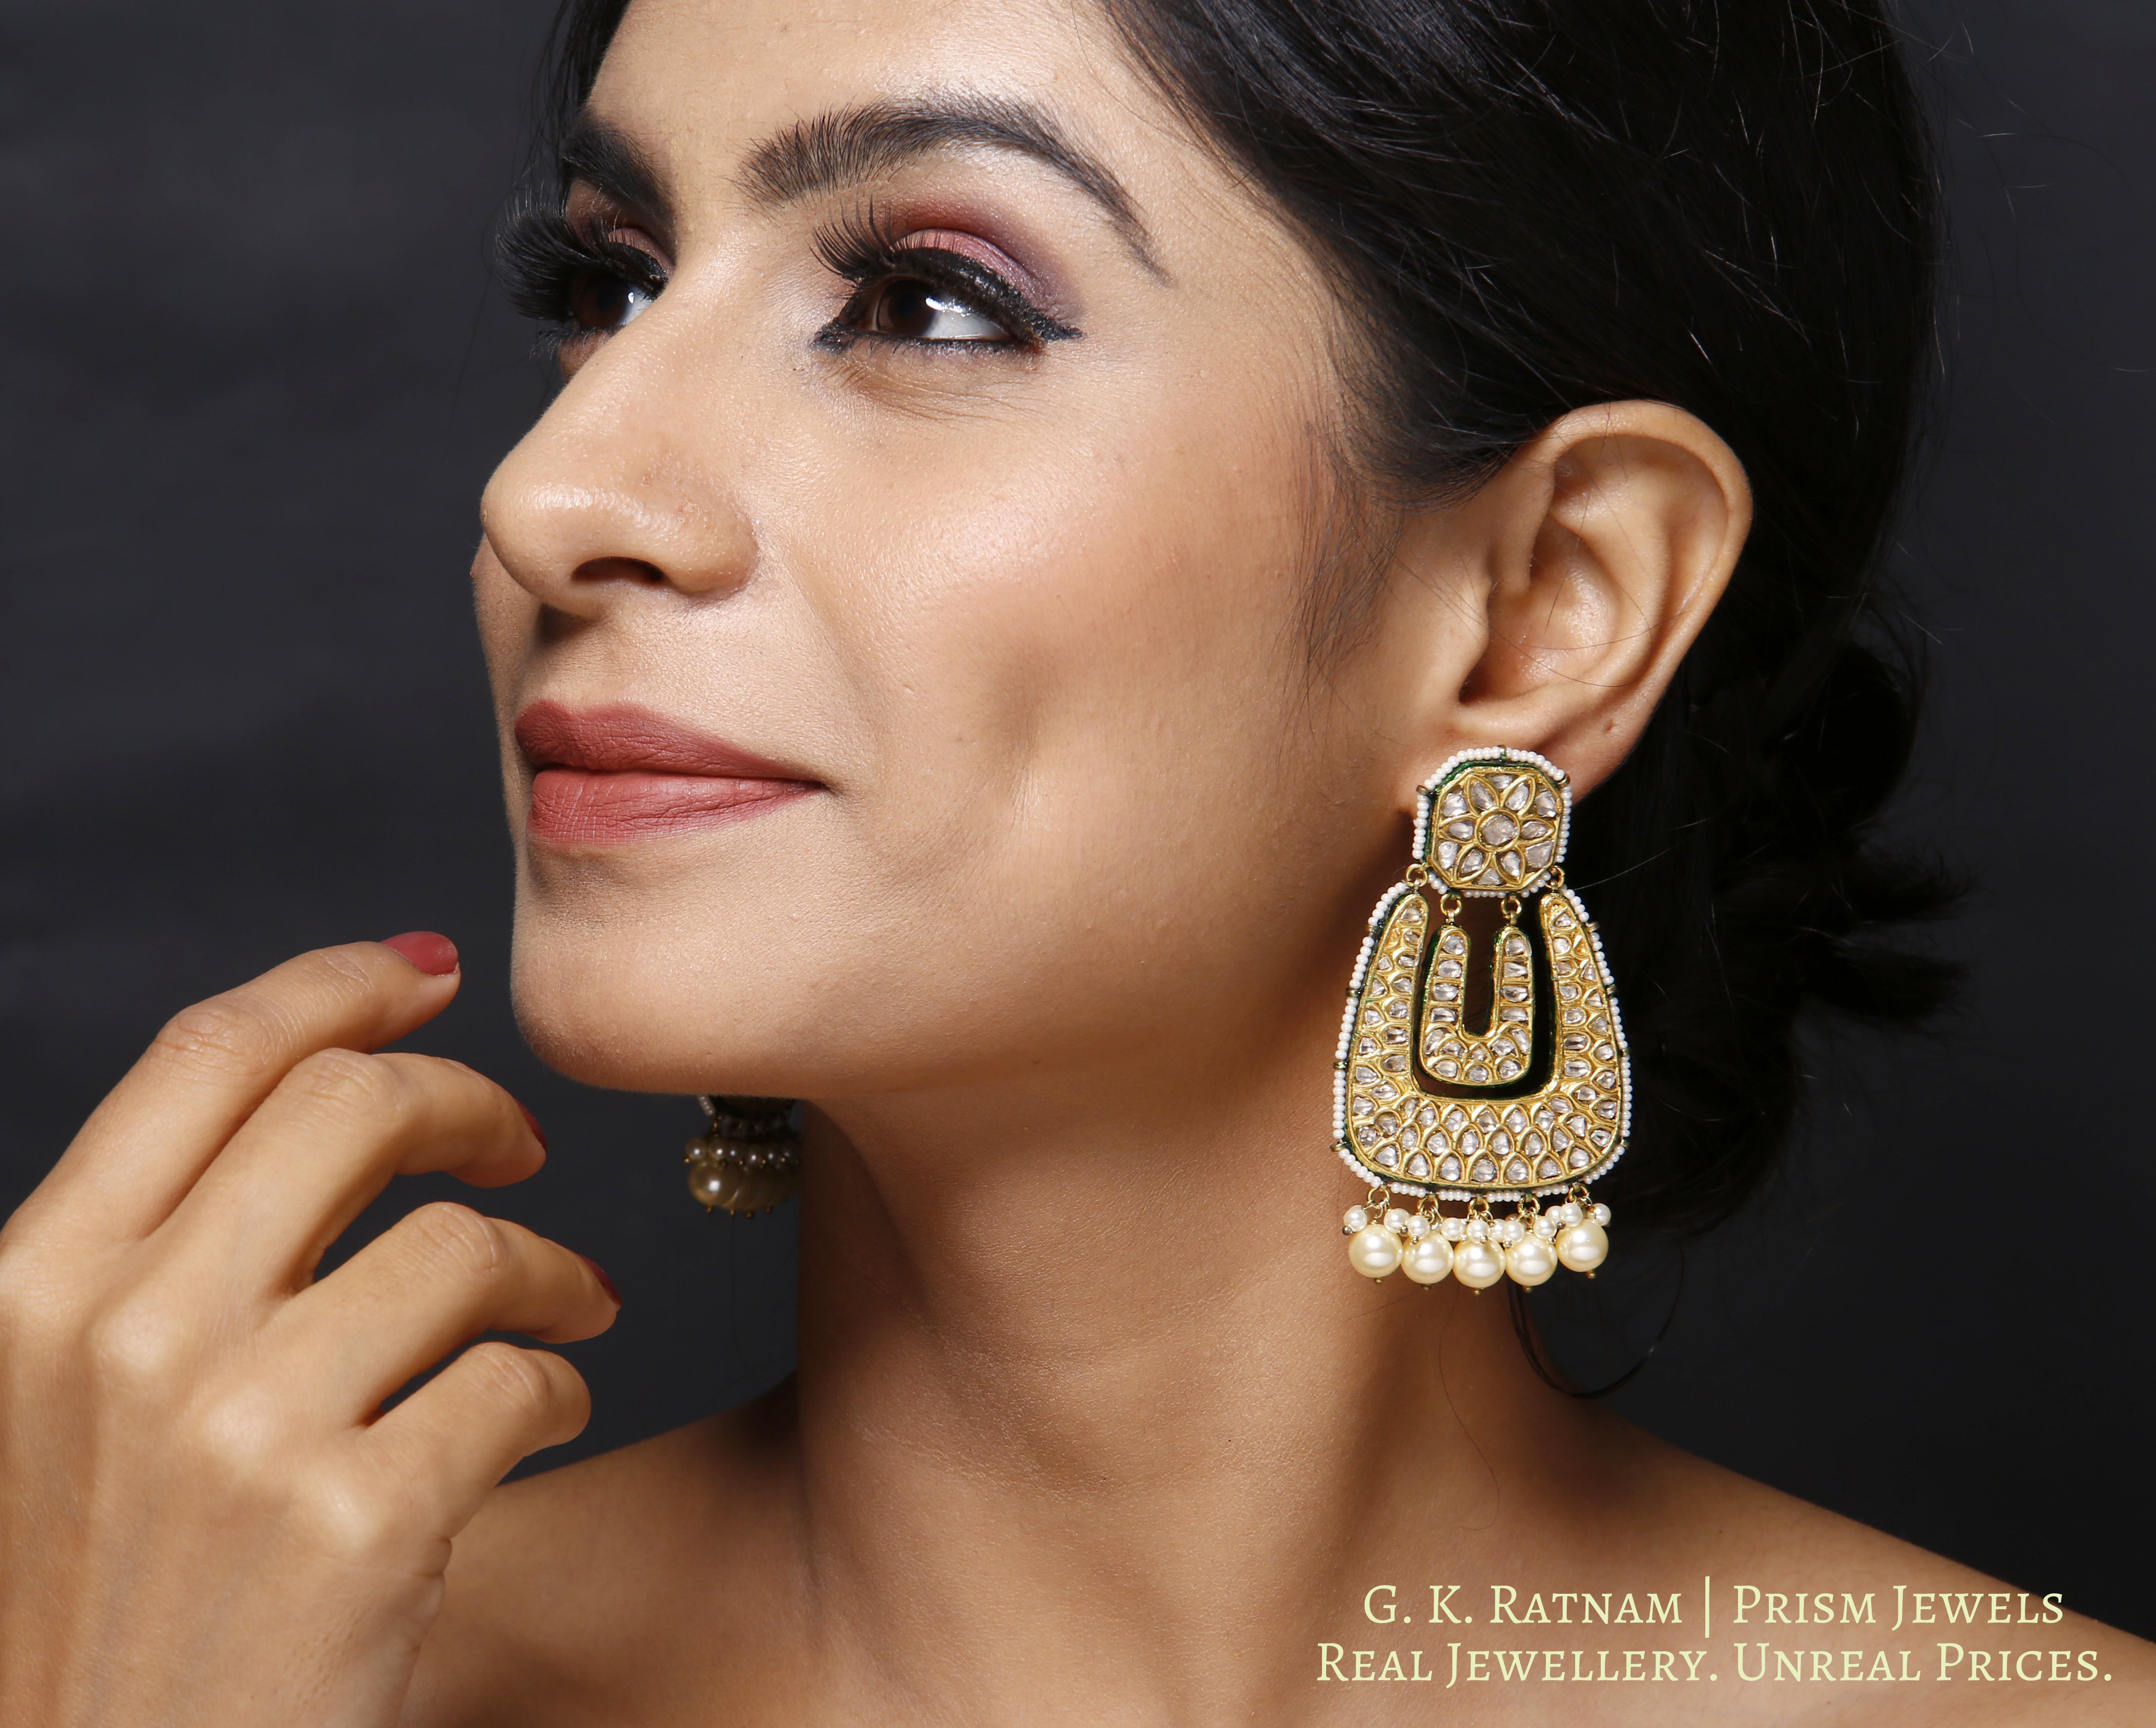 23k Gold and Diamond Polki Chand Bali Earring Pair with long U-shaped chands - gold diamond polki kundan meena jadau jewellery